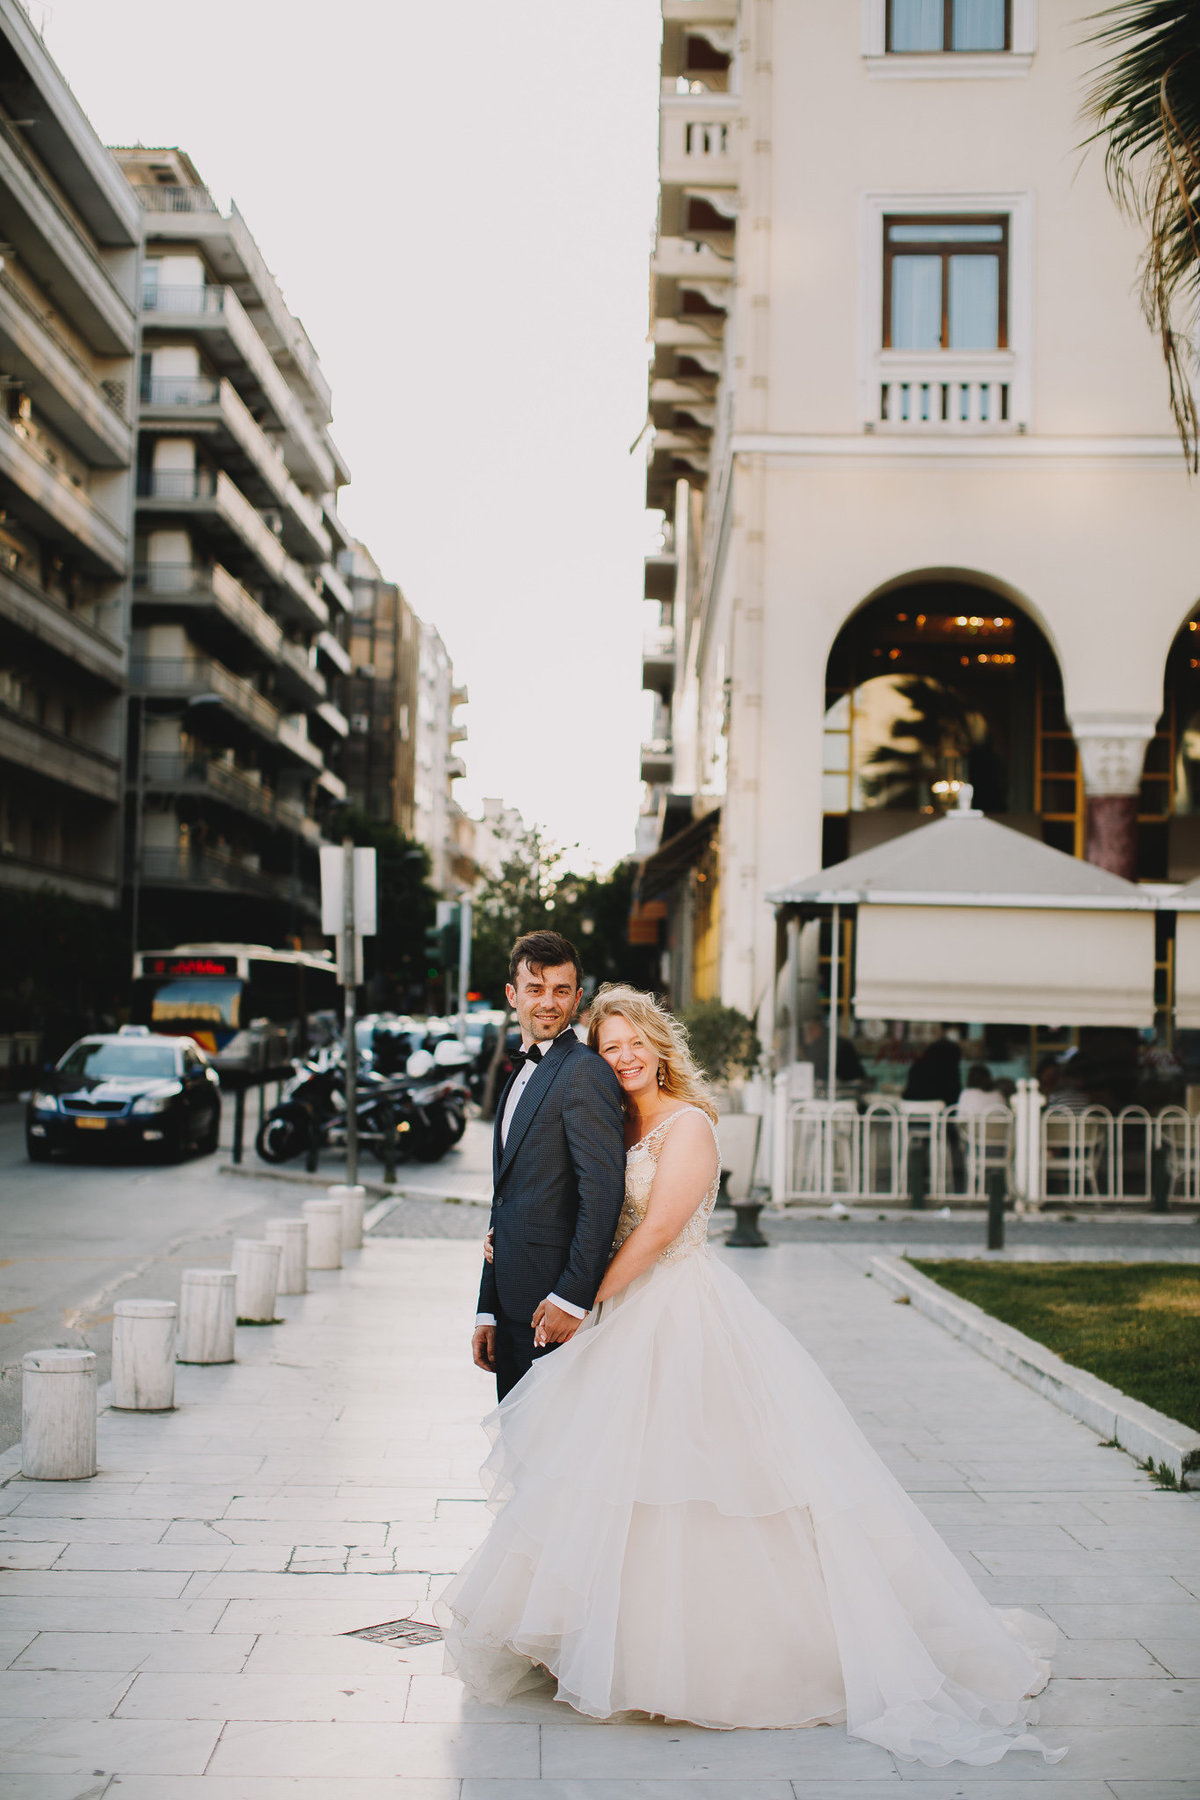 Archer Inspired Photography Thessaloniki Greece Wedding Portraits - International SoCal California Long Beach Photographer-42